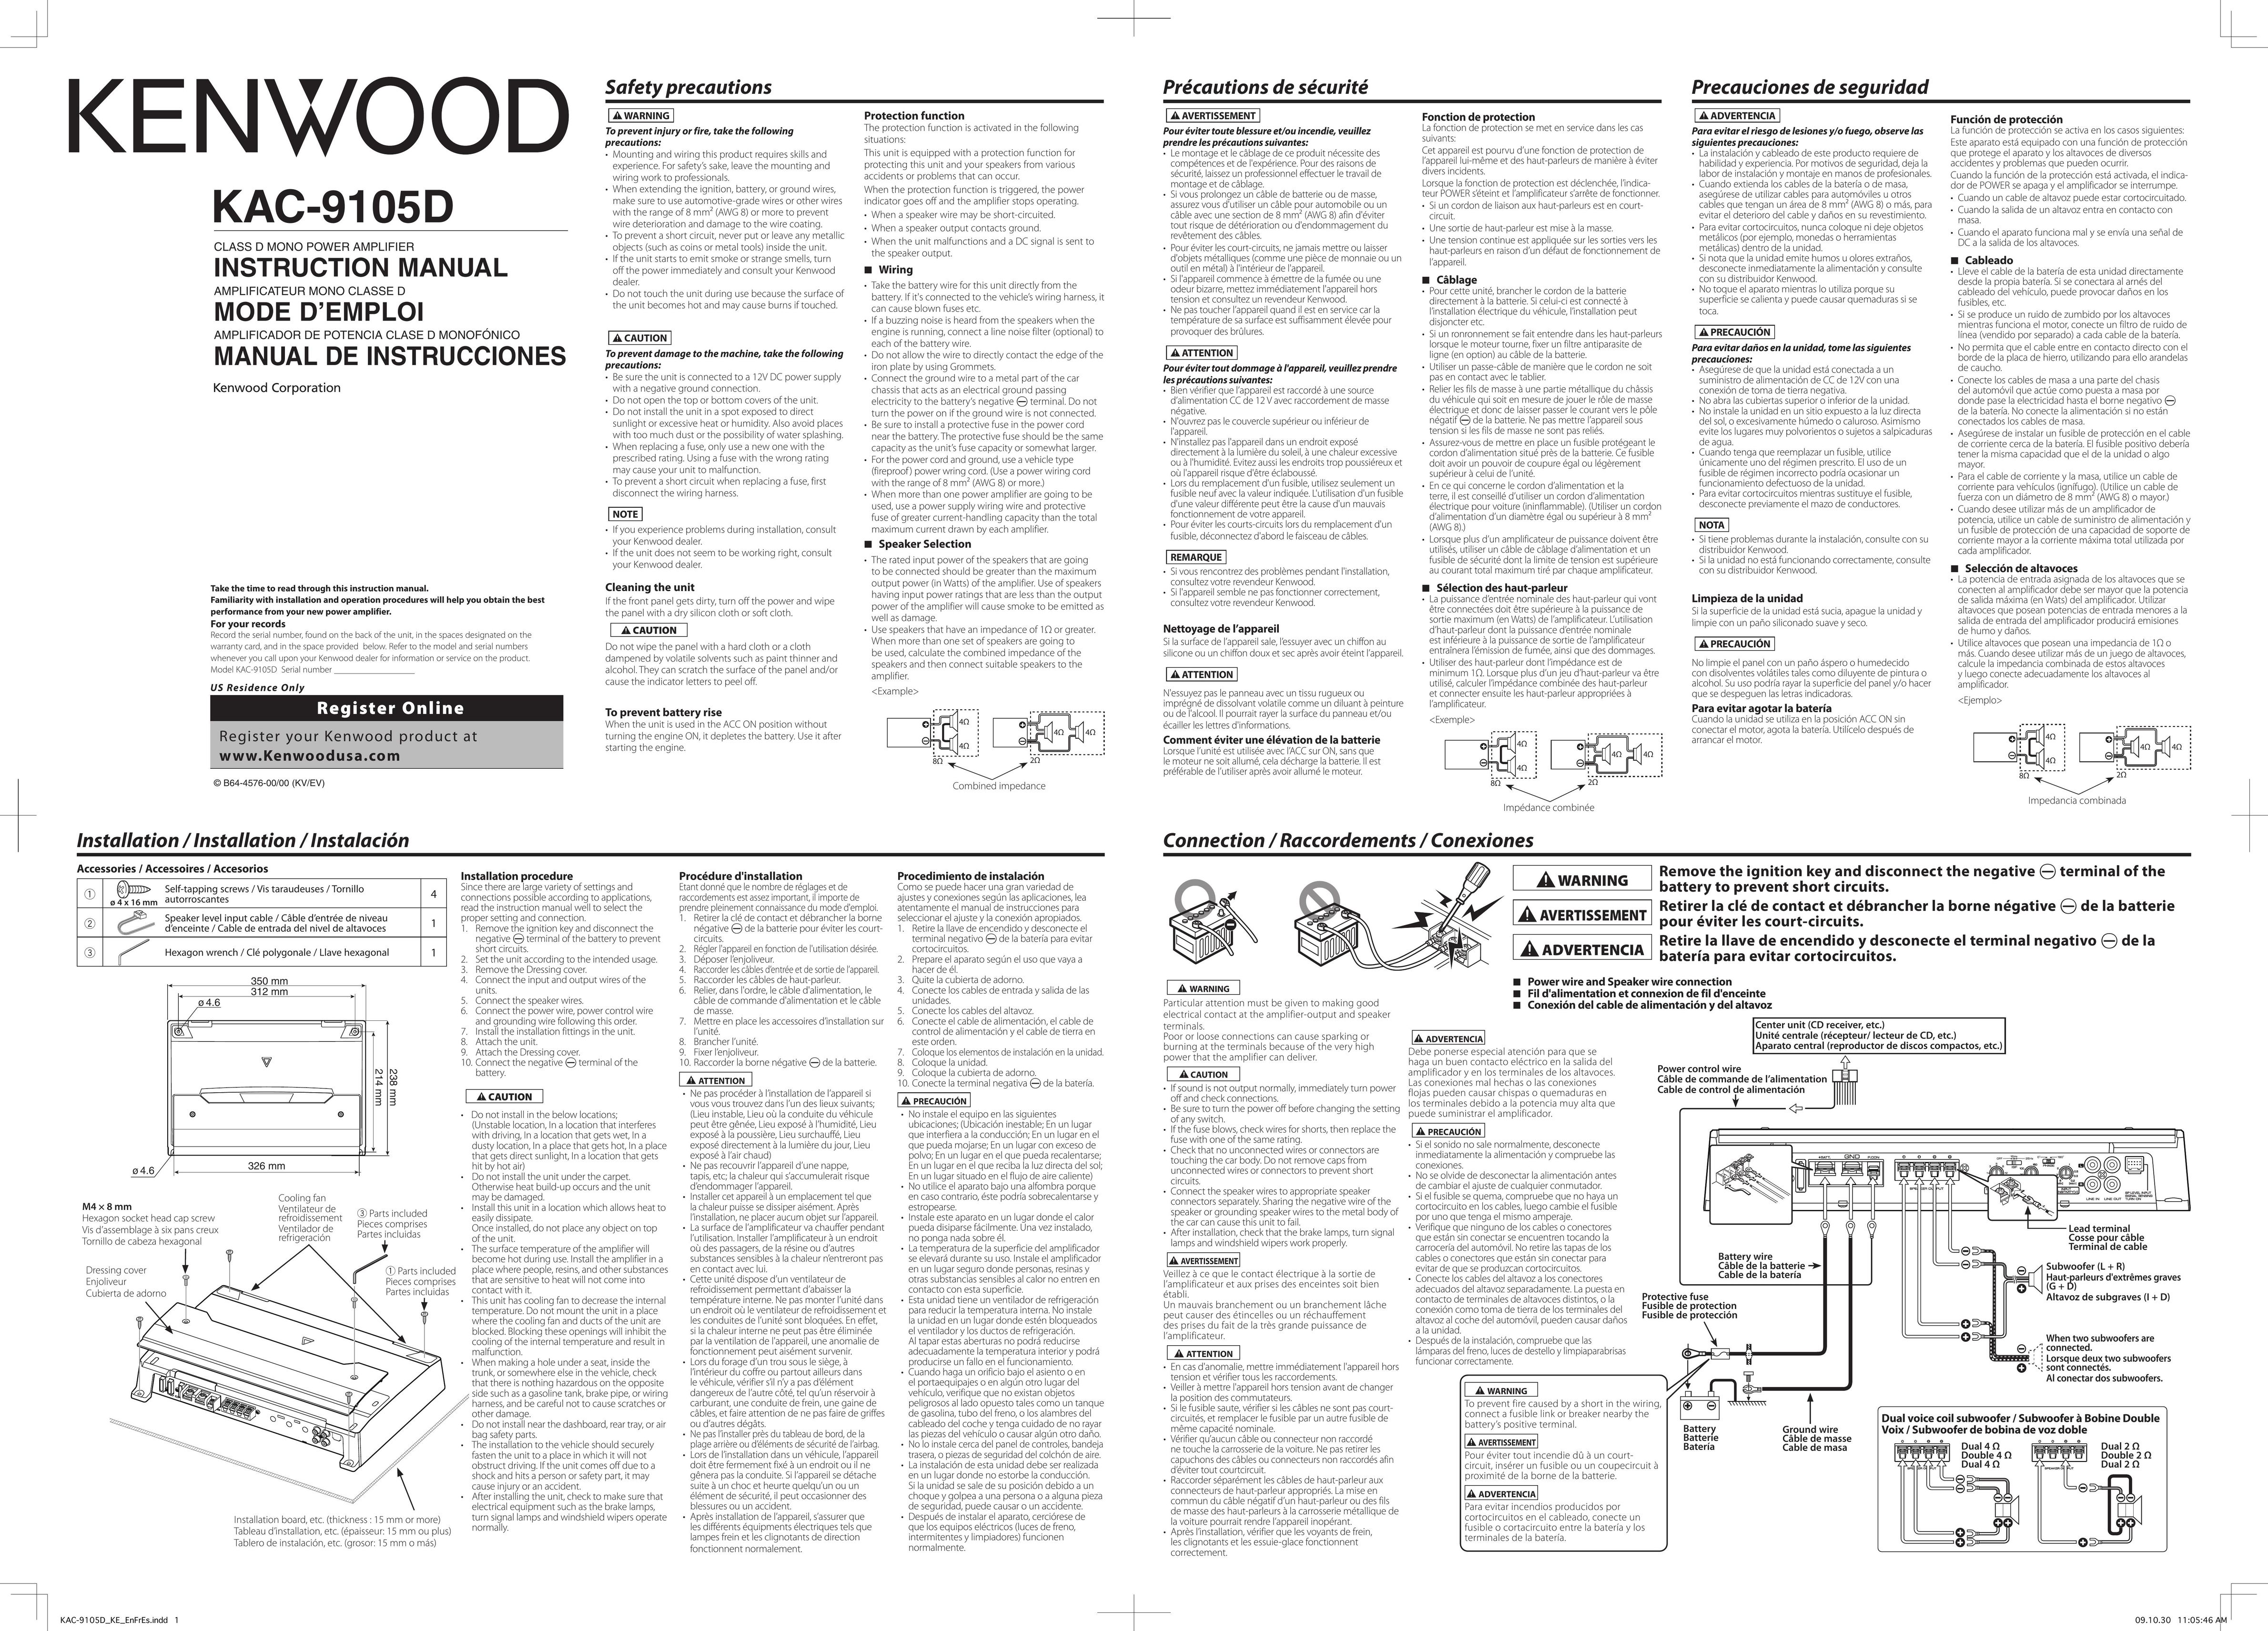 Kenwood KAC-9105D Car Amplifier User Manual